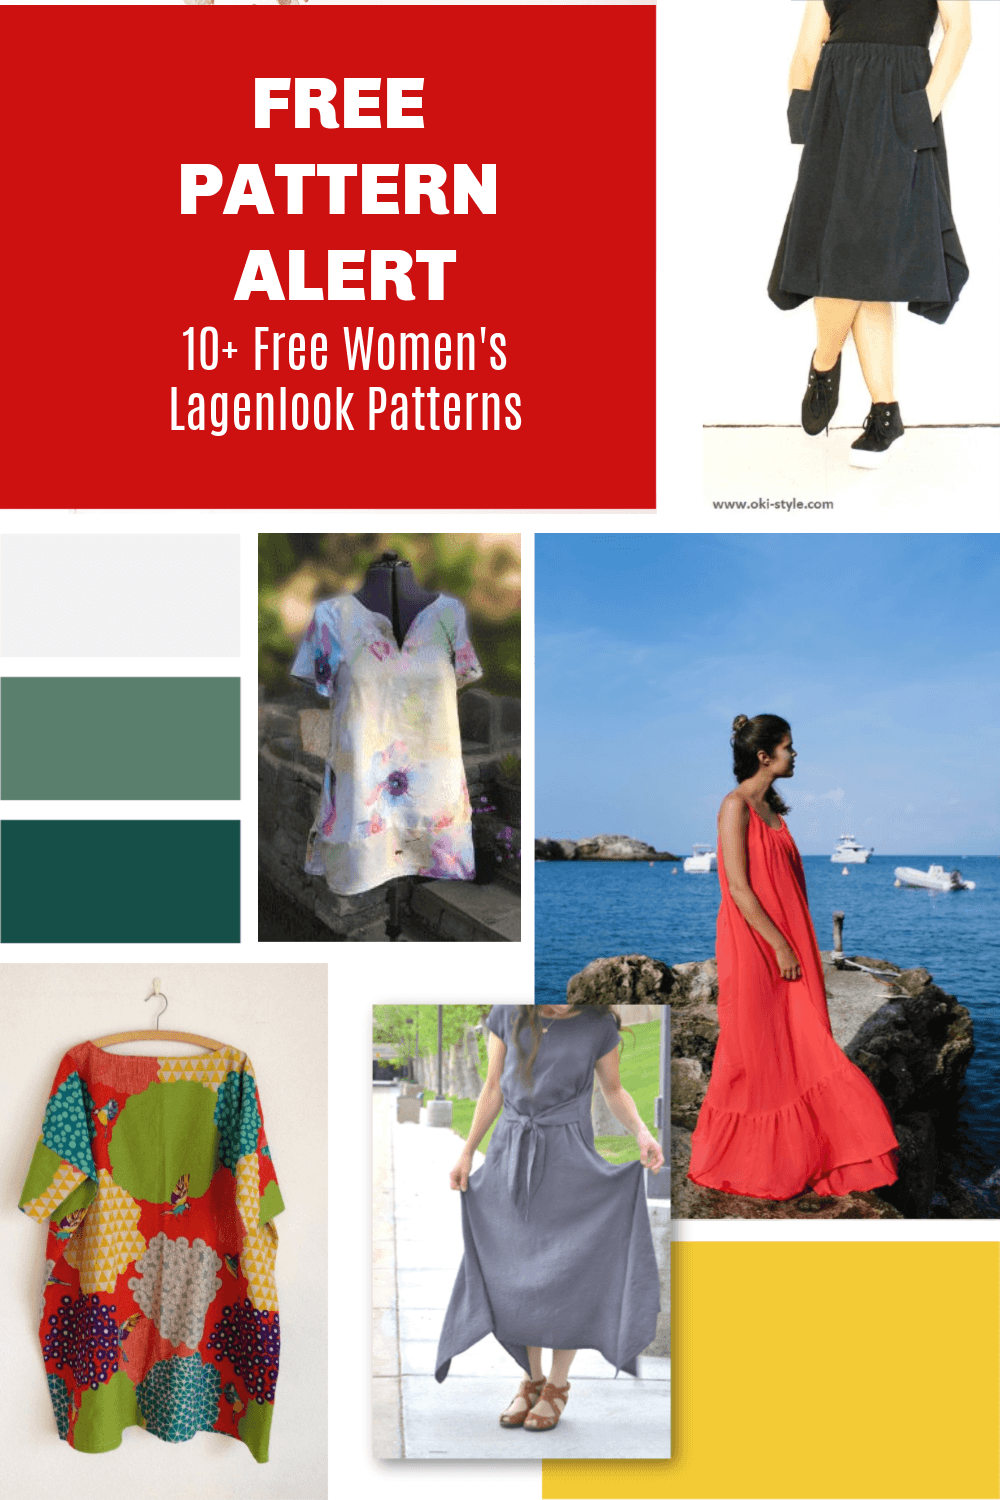 FREE PATTERN ALERT: 10+ Free Women's Lagenlook Patterns